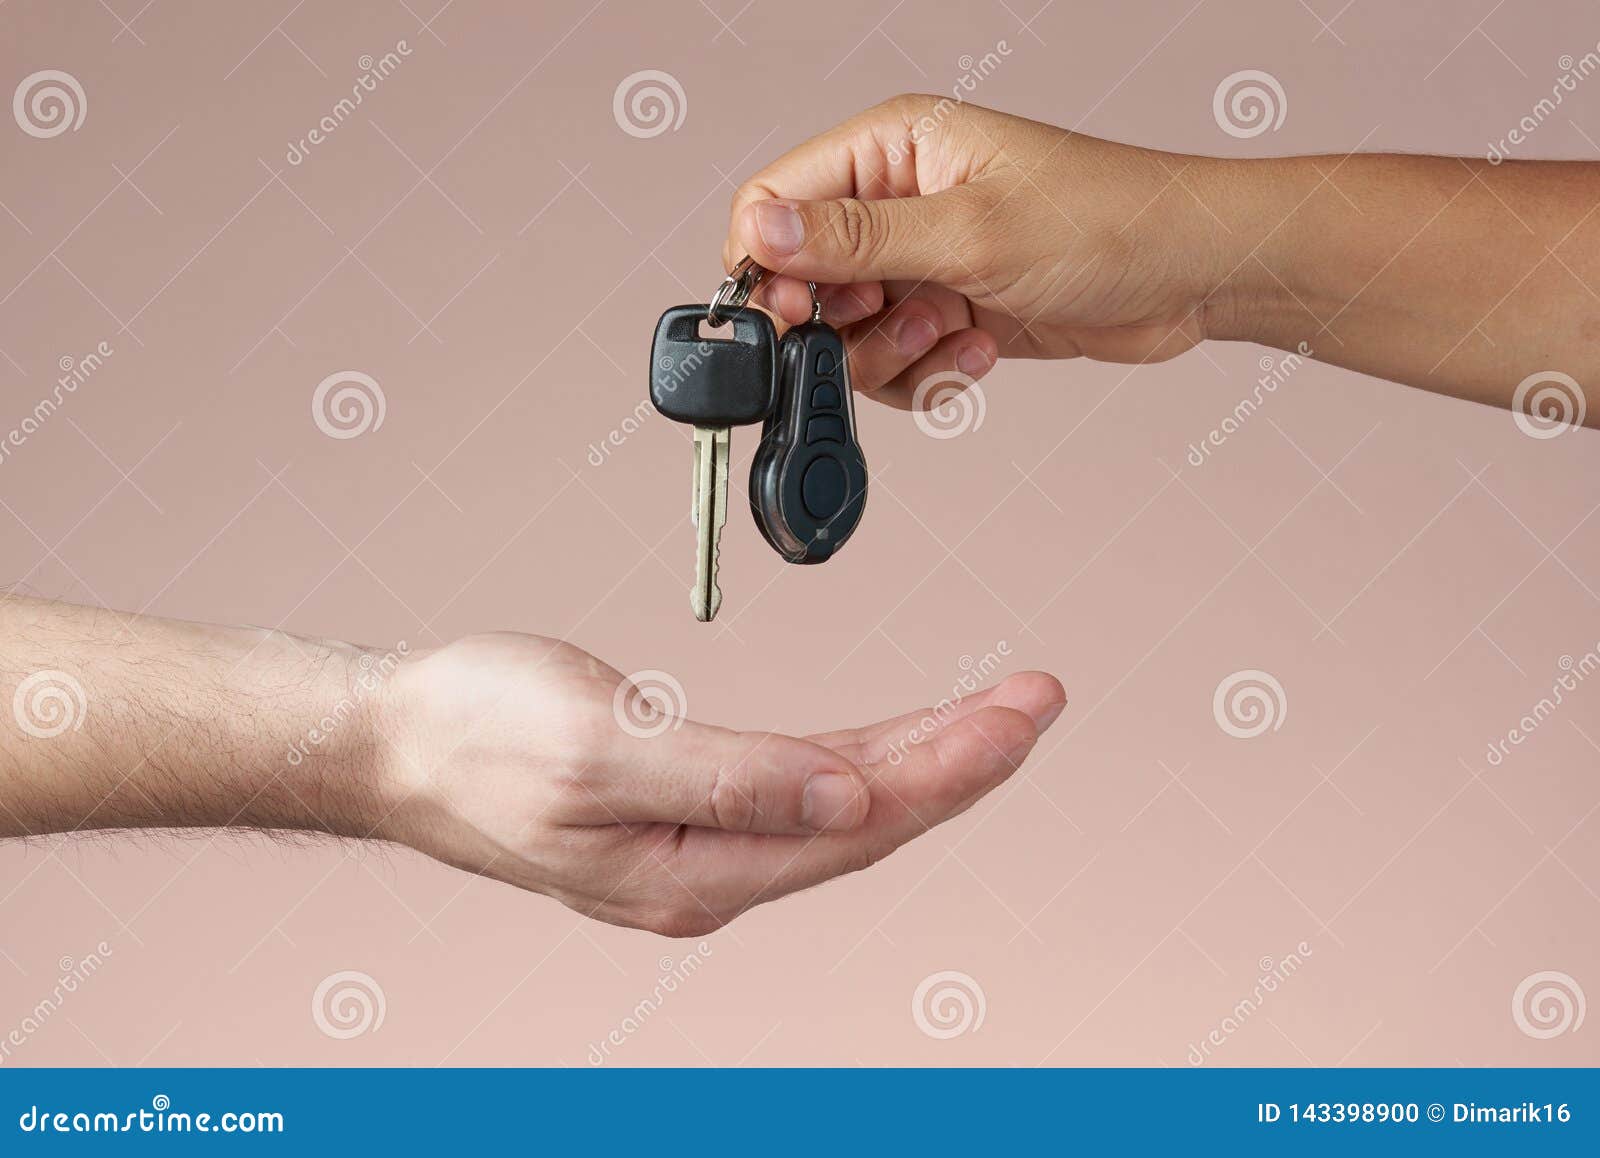 После получения руки. Ключи от машины в руке. Протянутая рука с ключами от машины. Ключ в руке. Рука с ключами от авто.